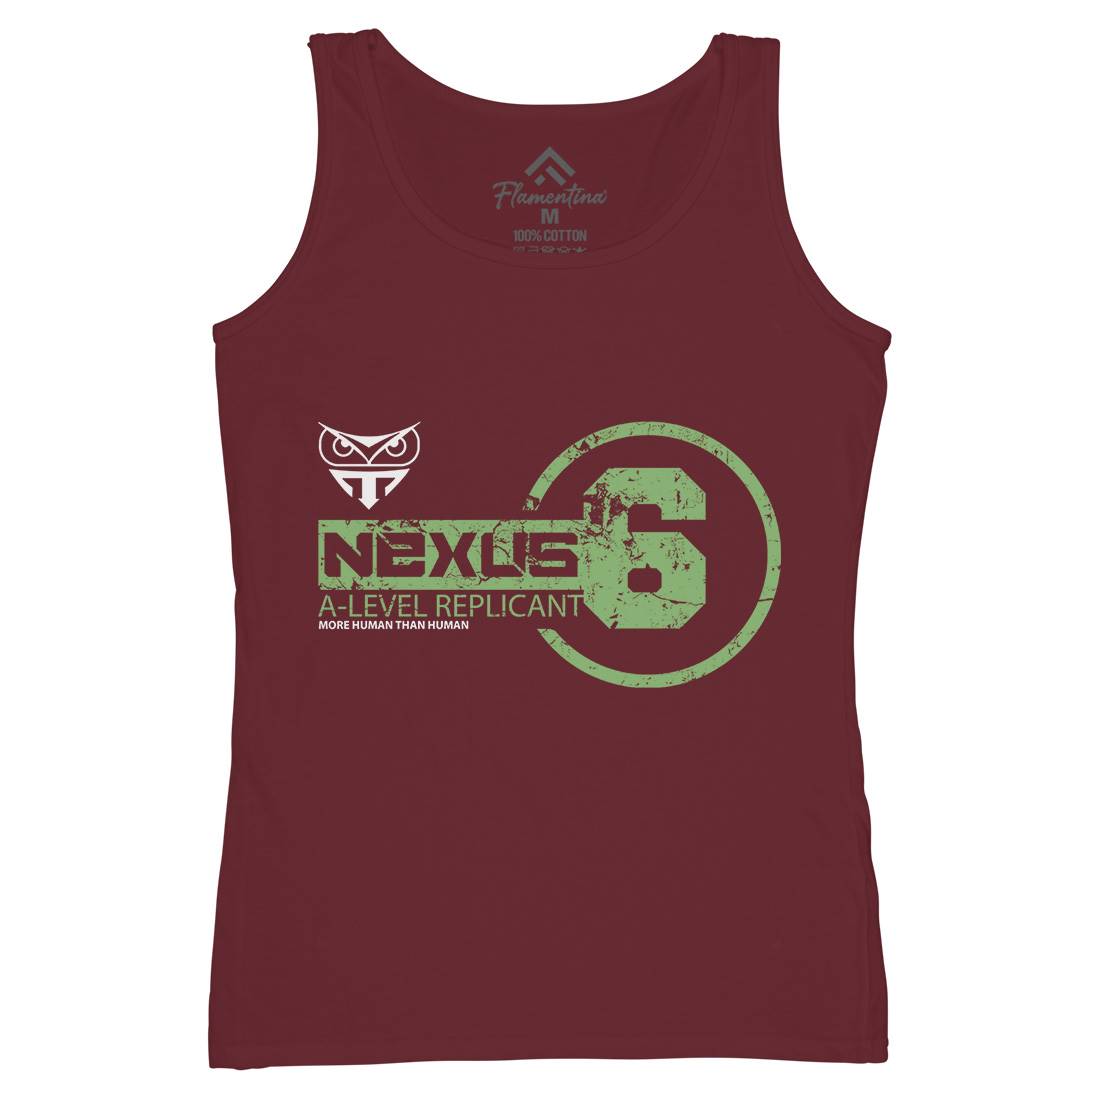 Nexus-6 Womens Organic Tank Top Vest Space D222